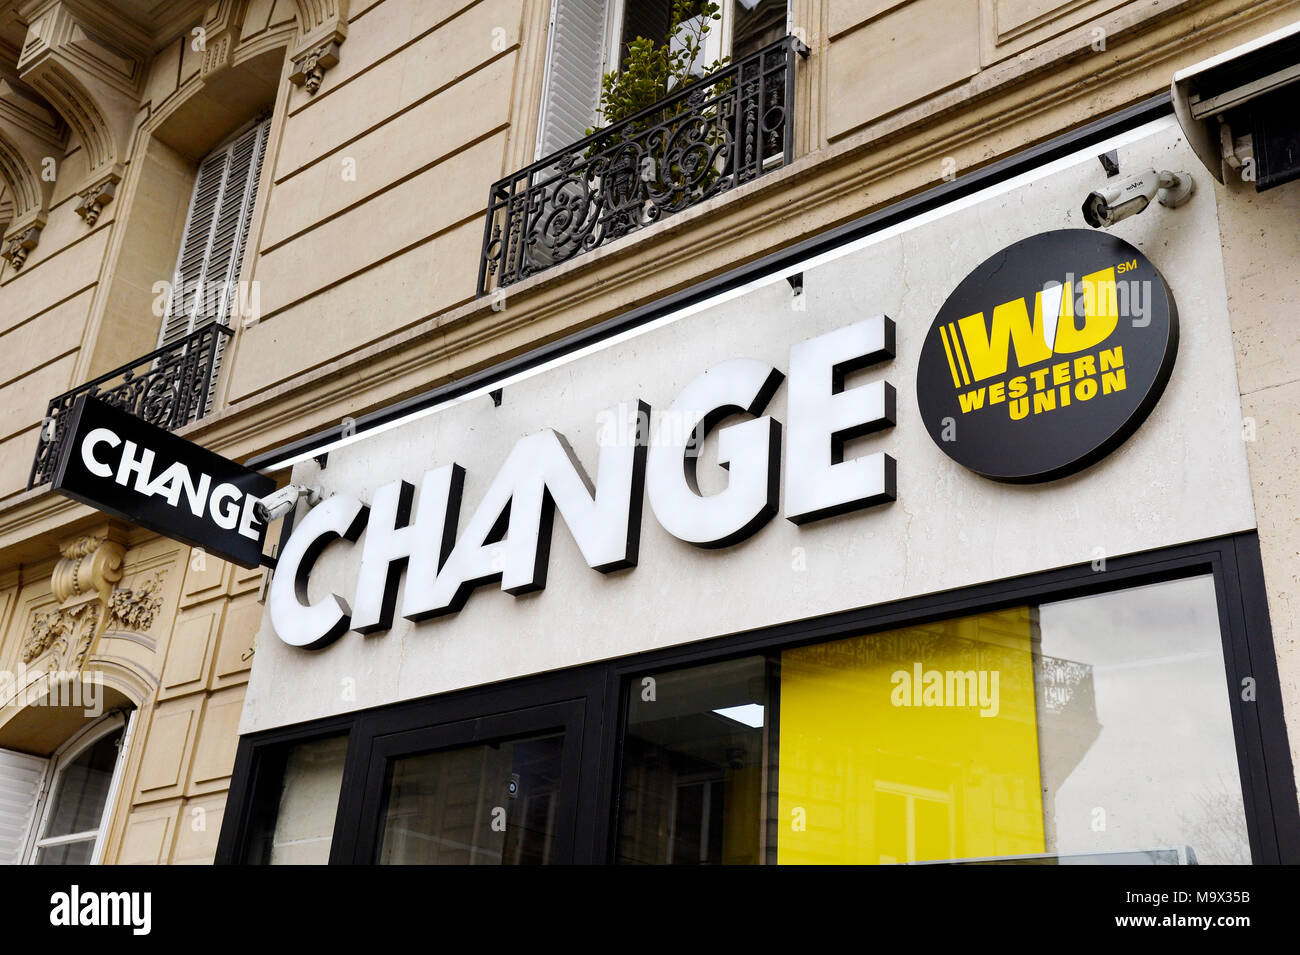 Western Union change - Paris - France Stock Photo - Alamy